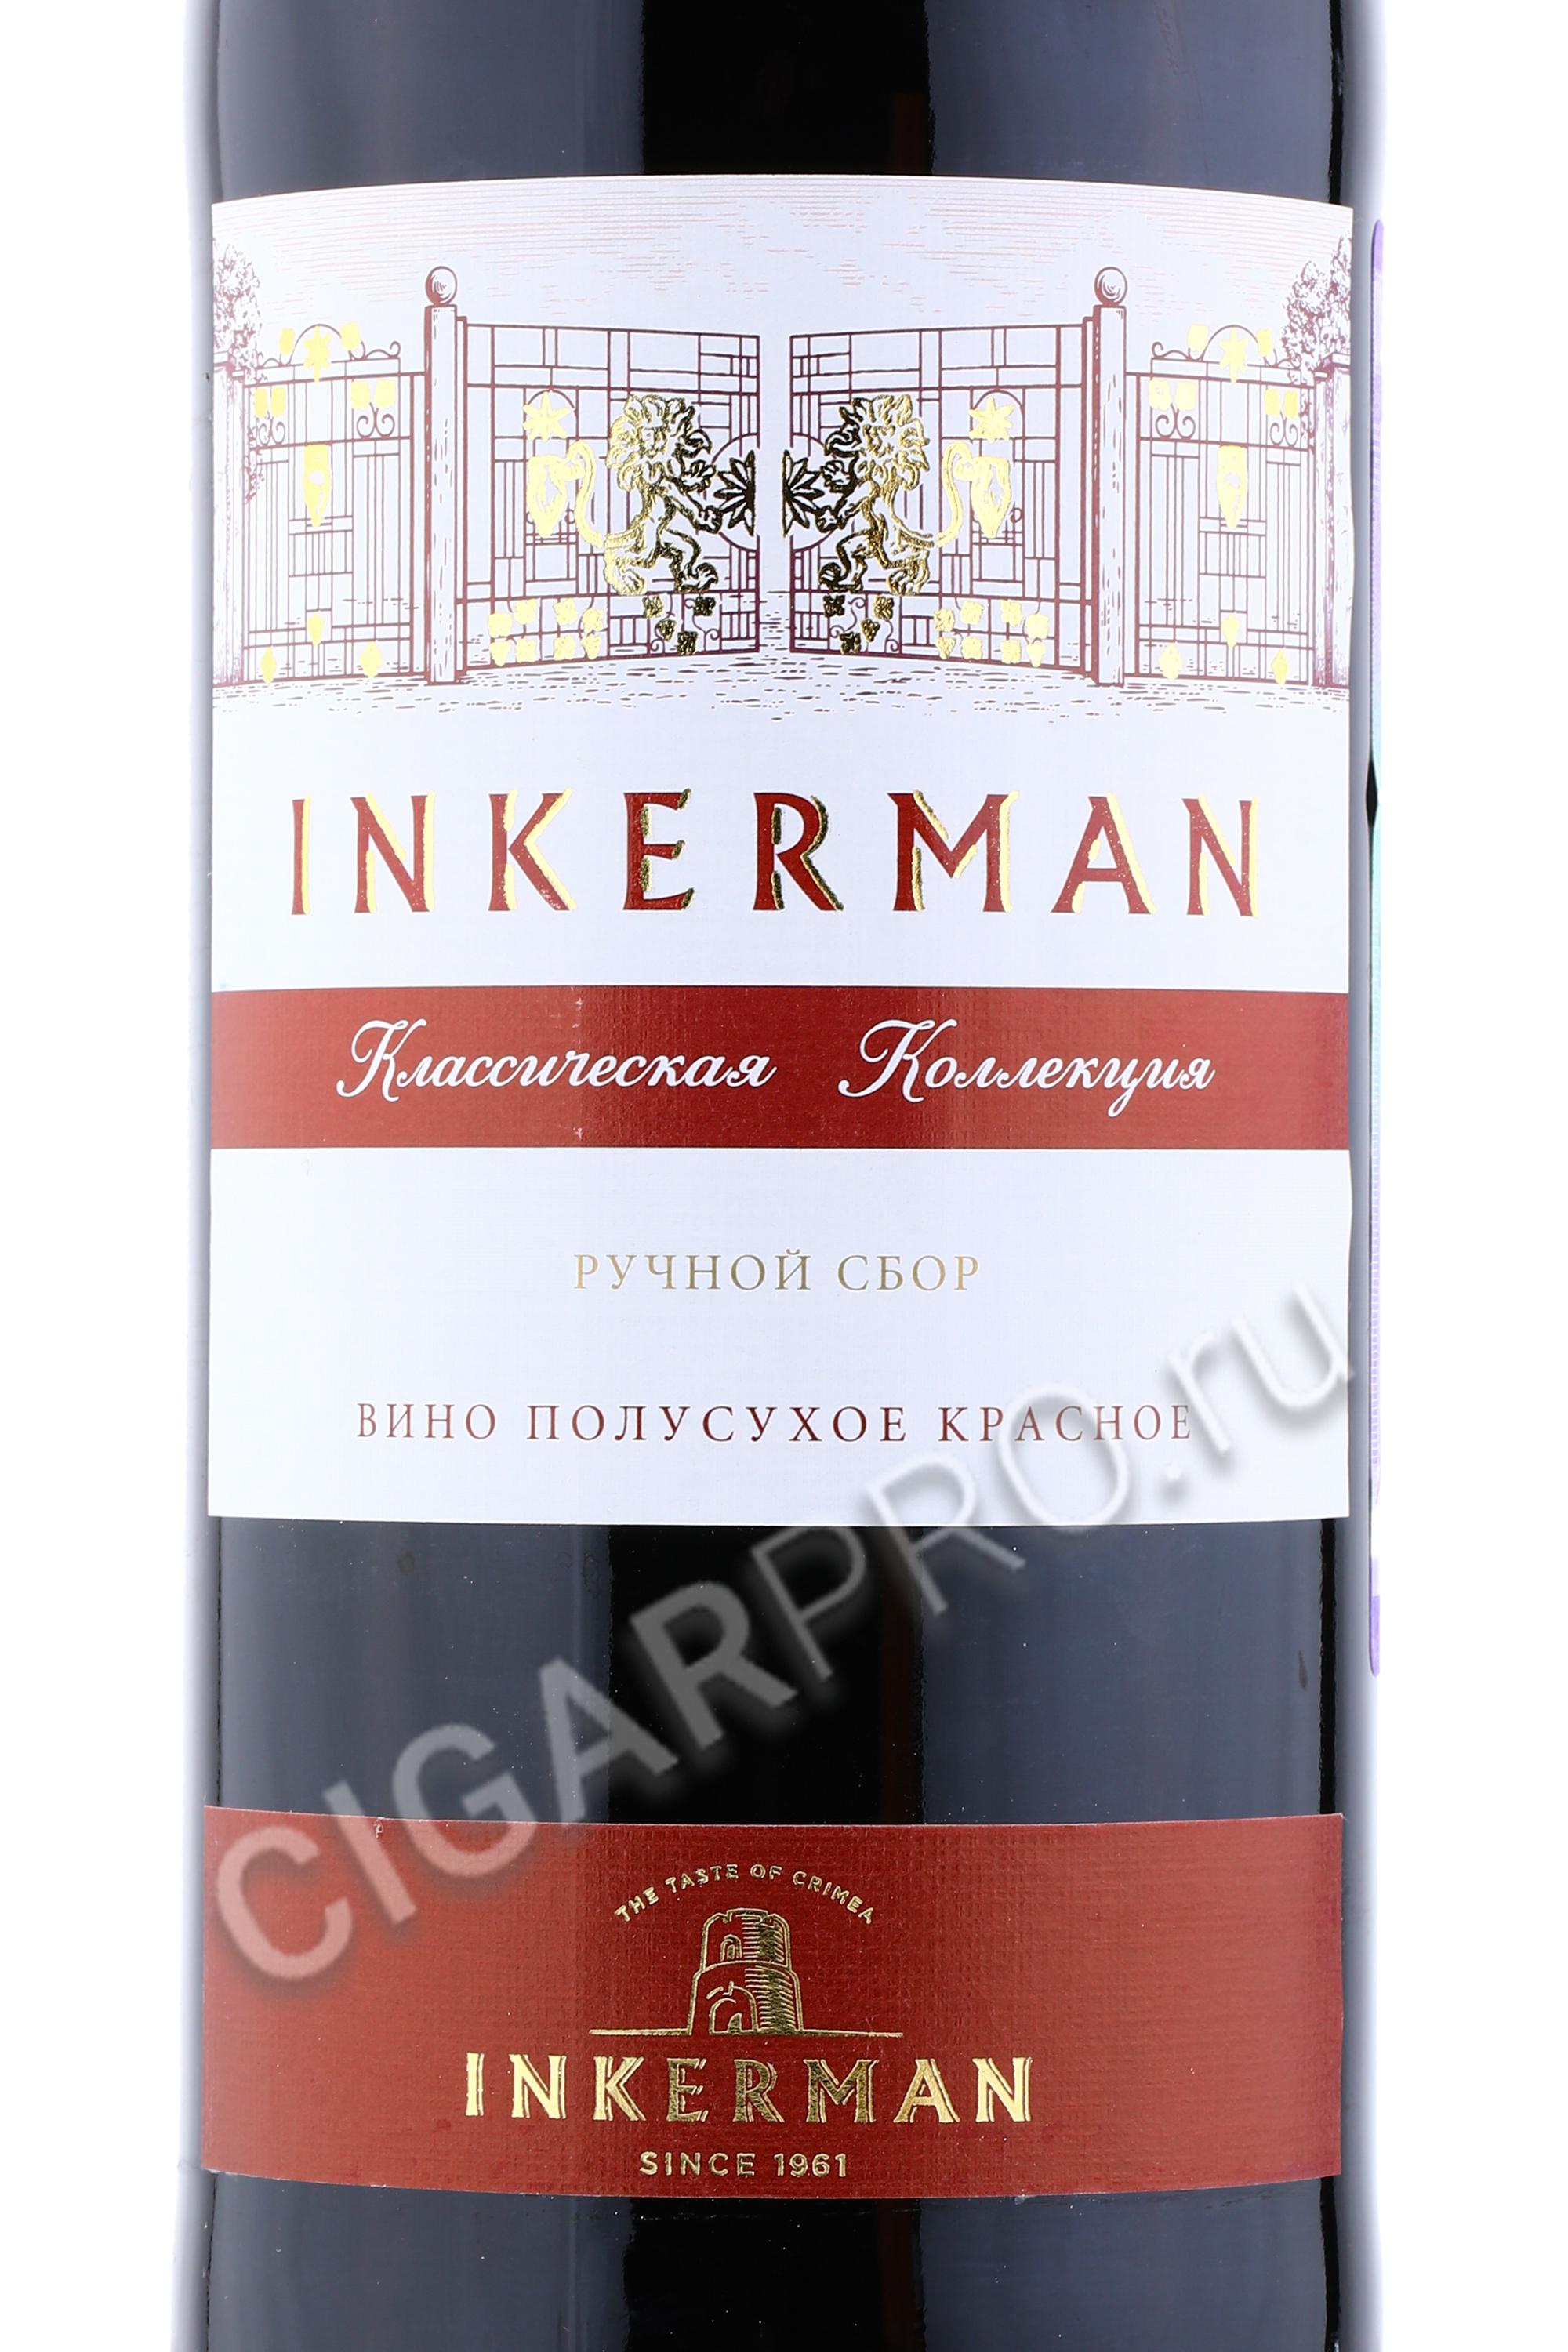 Инкерман красное полусухое. Вино Инкерман красное полусухое ручной сбор. Вино Инкерман красное полусухое 0.75. Шато Руж Инкерман красное полусухое. Пино Руж полусухое вино Инкерман.